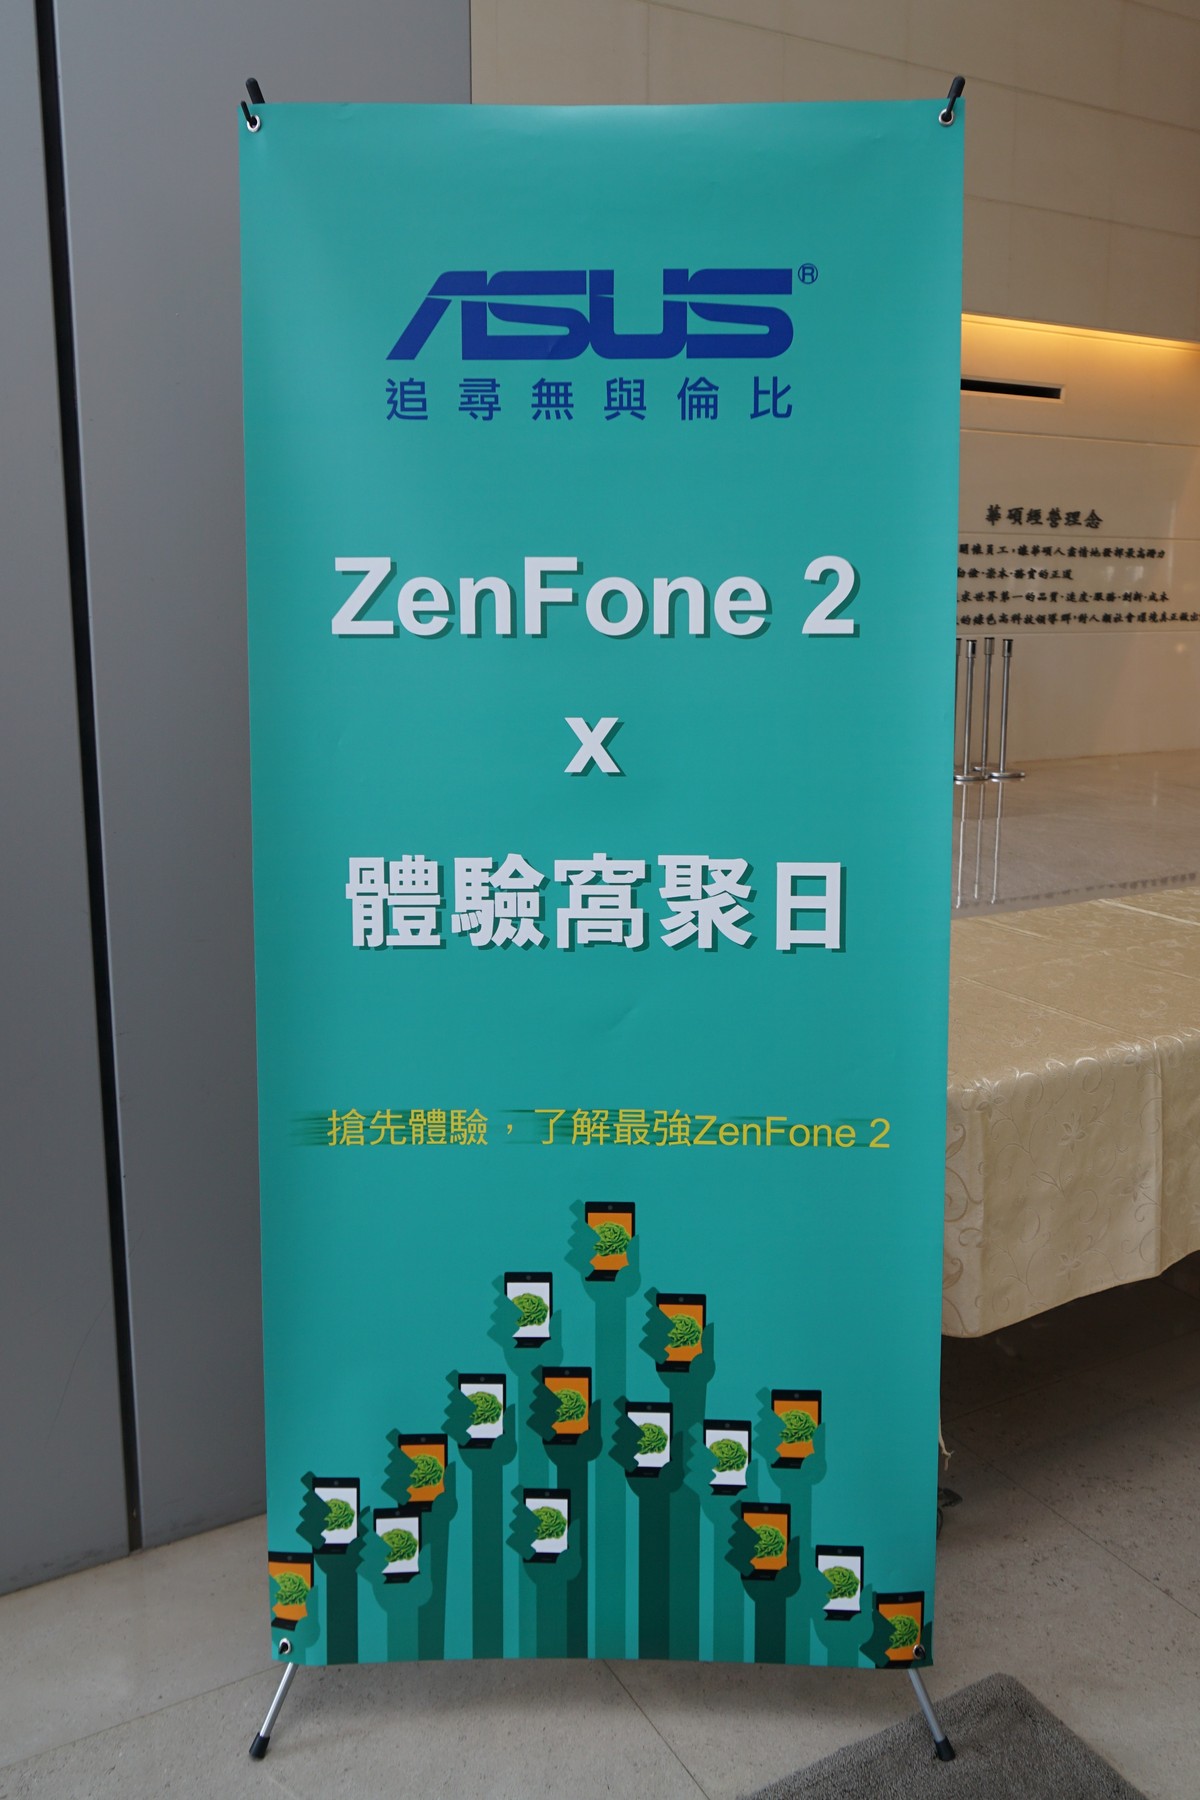 [APFG] 閱聽視界 大有Zen機 ASUS Focus Group 2015Q1活動紀實